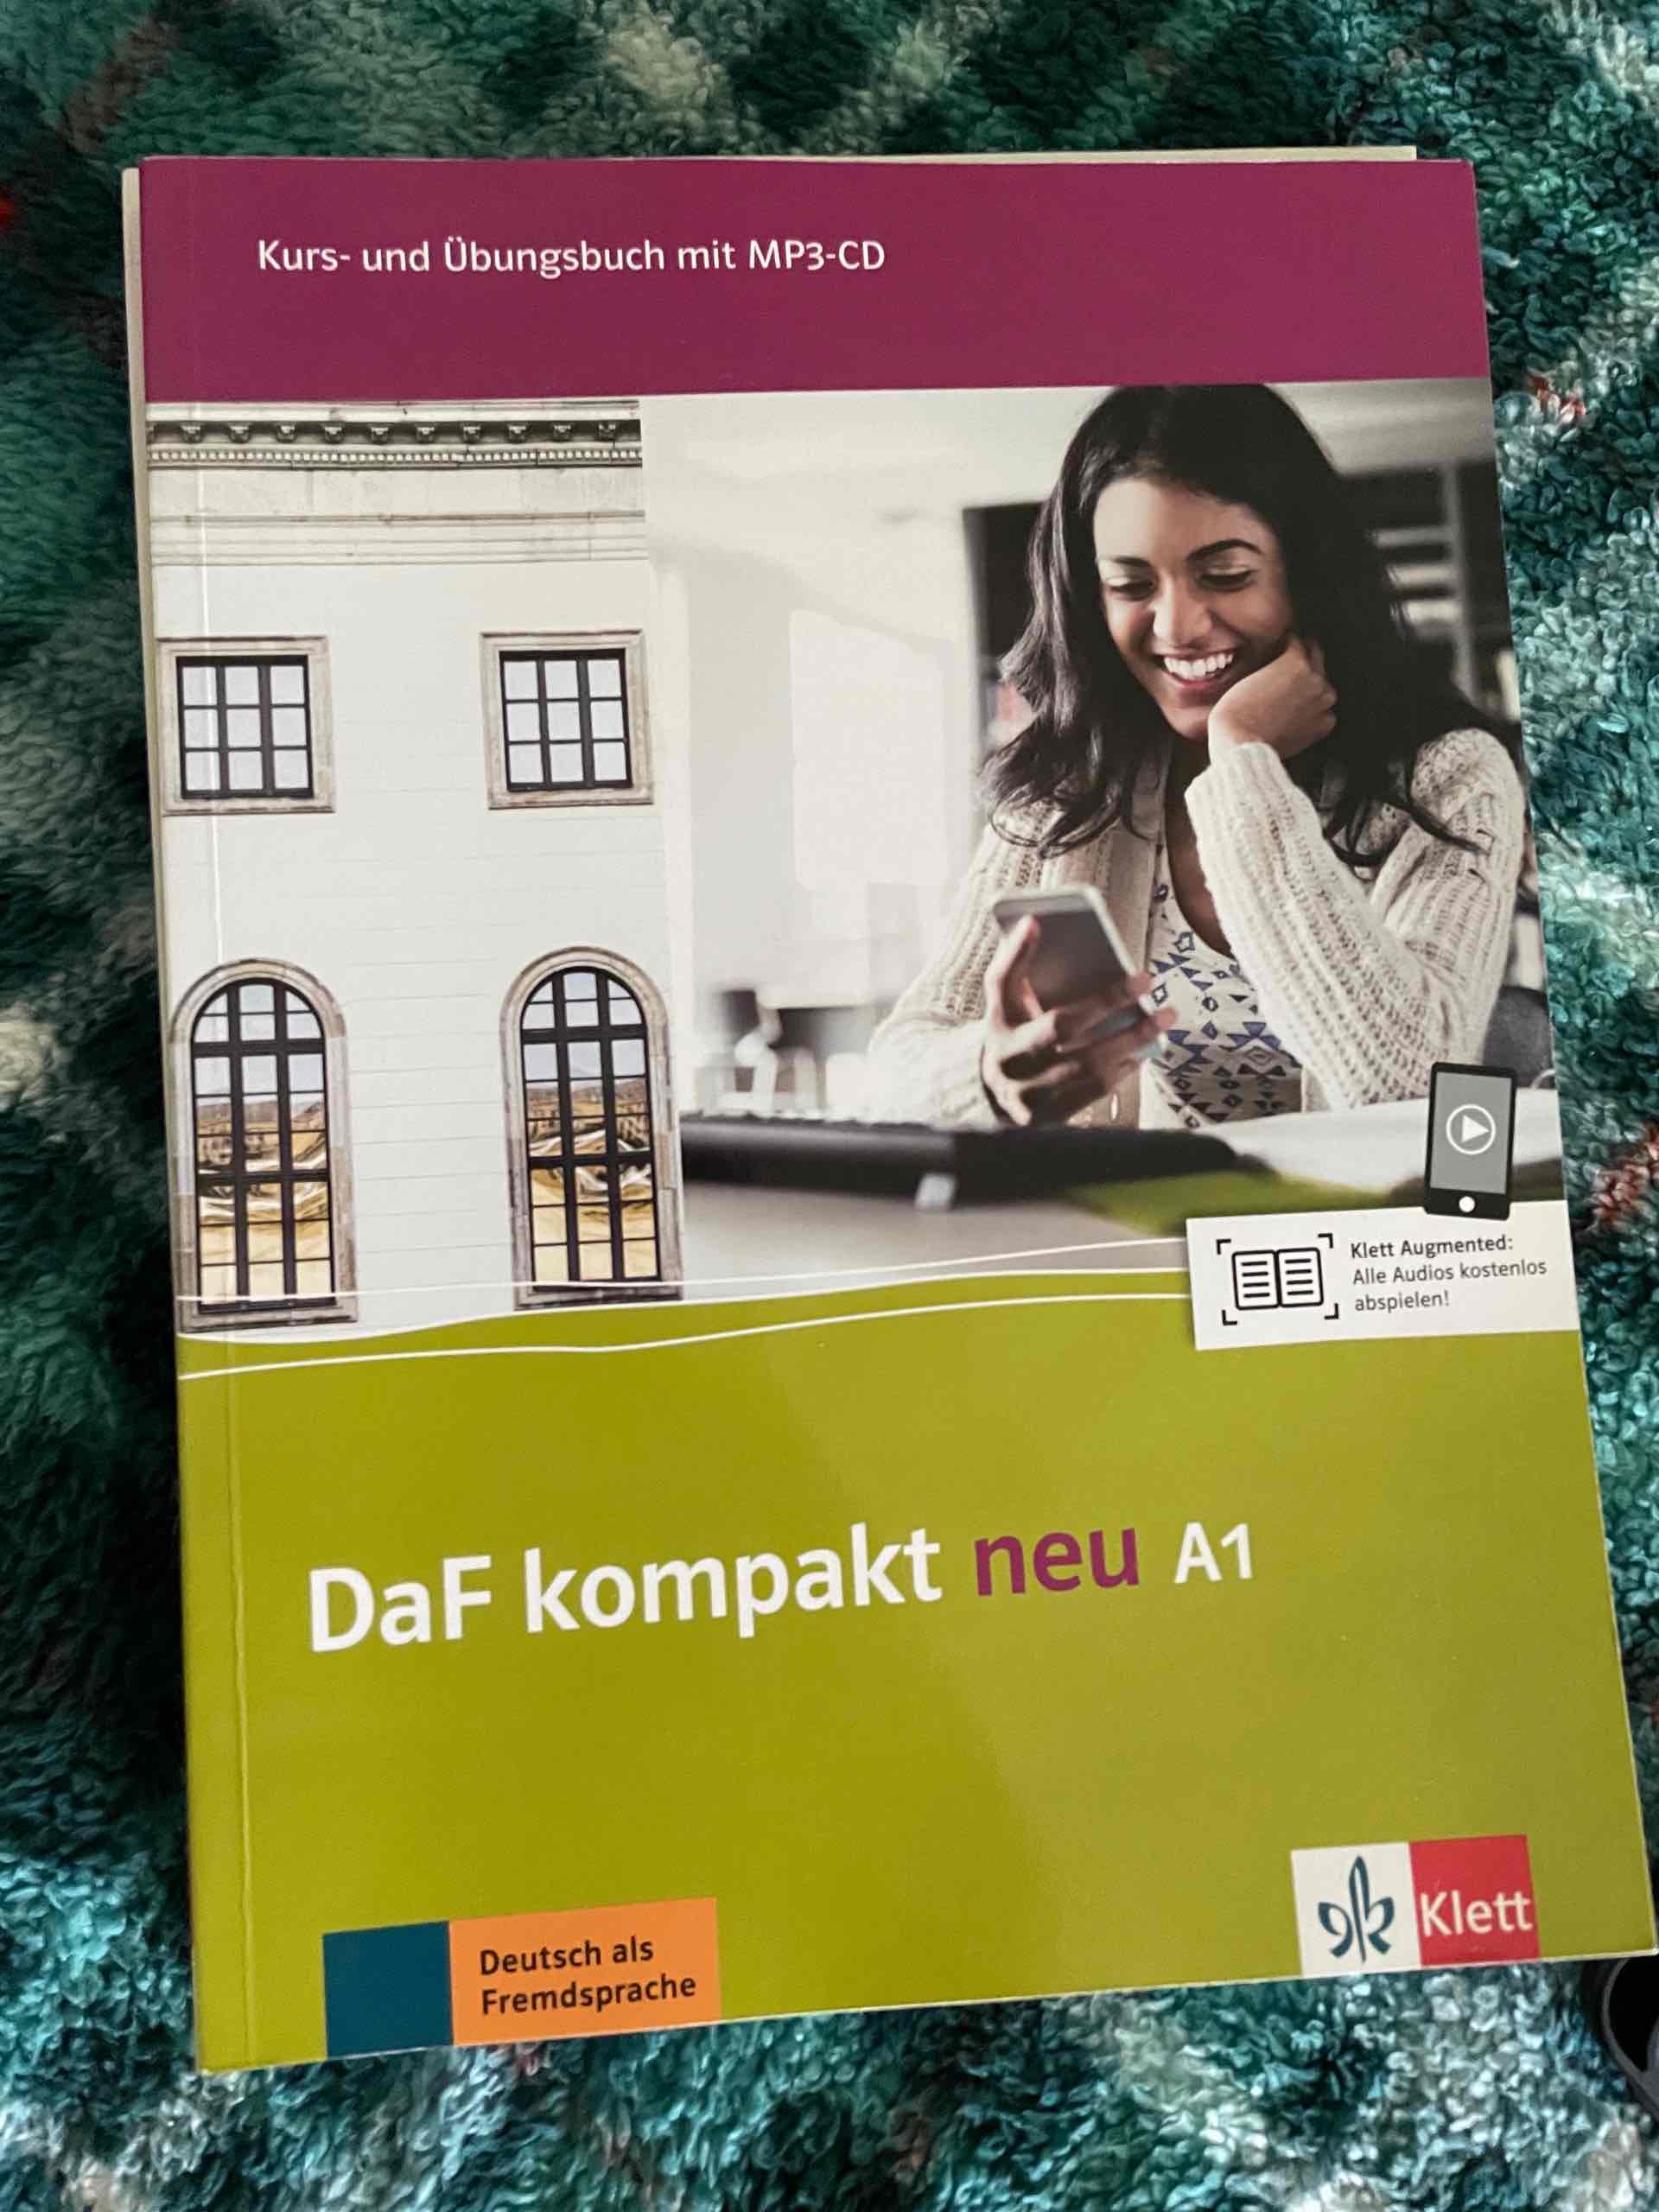 Daf Kompakt Neu A1 - Kurs und Ubungsbuch + CD Mp3 libro usato